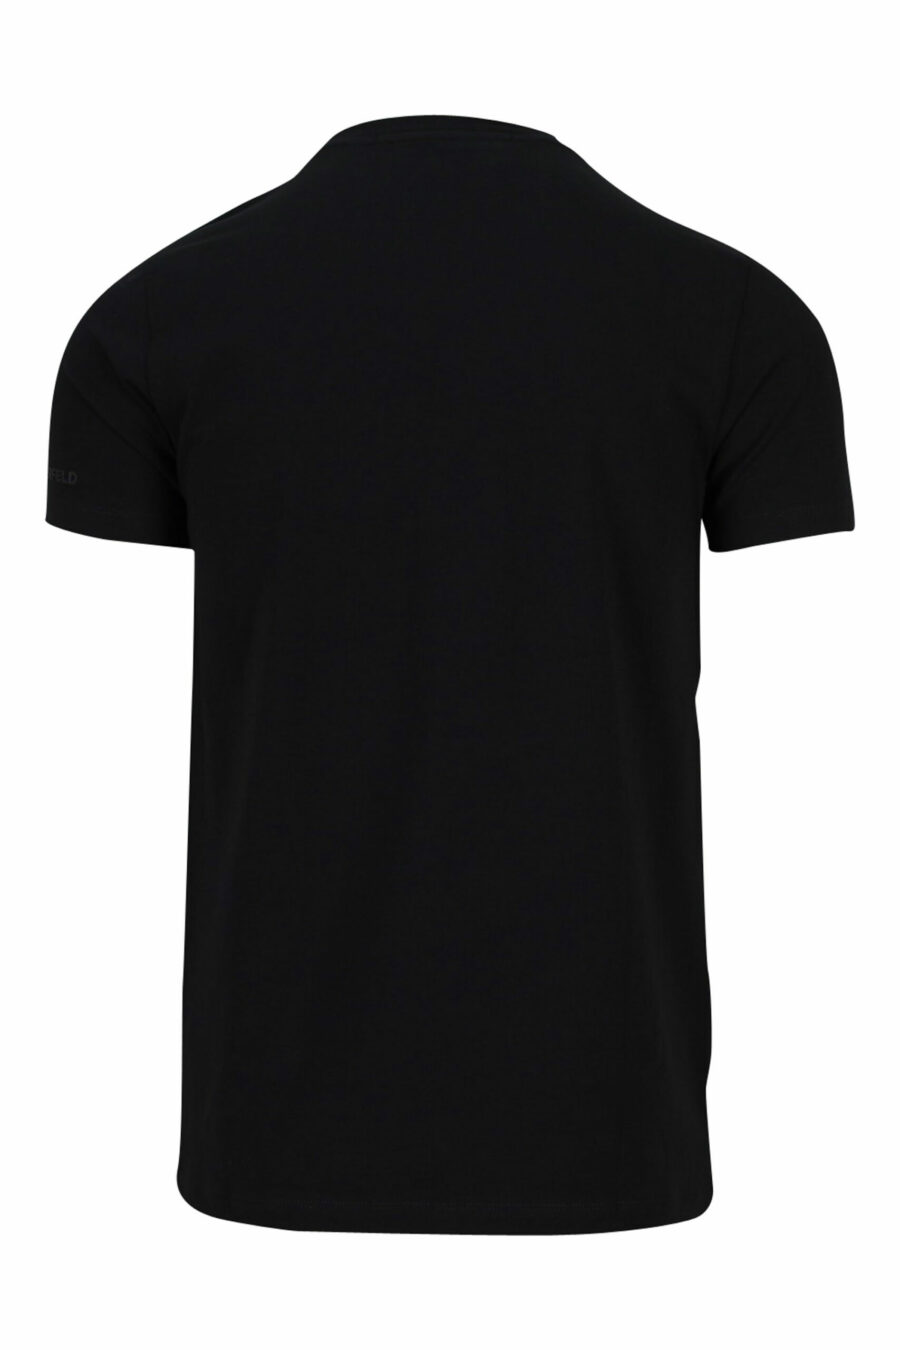 Black T-shirt with monochrome rubber maxilogo - 4062226401425 5 scaled